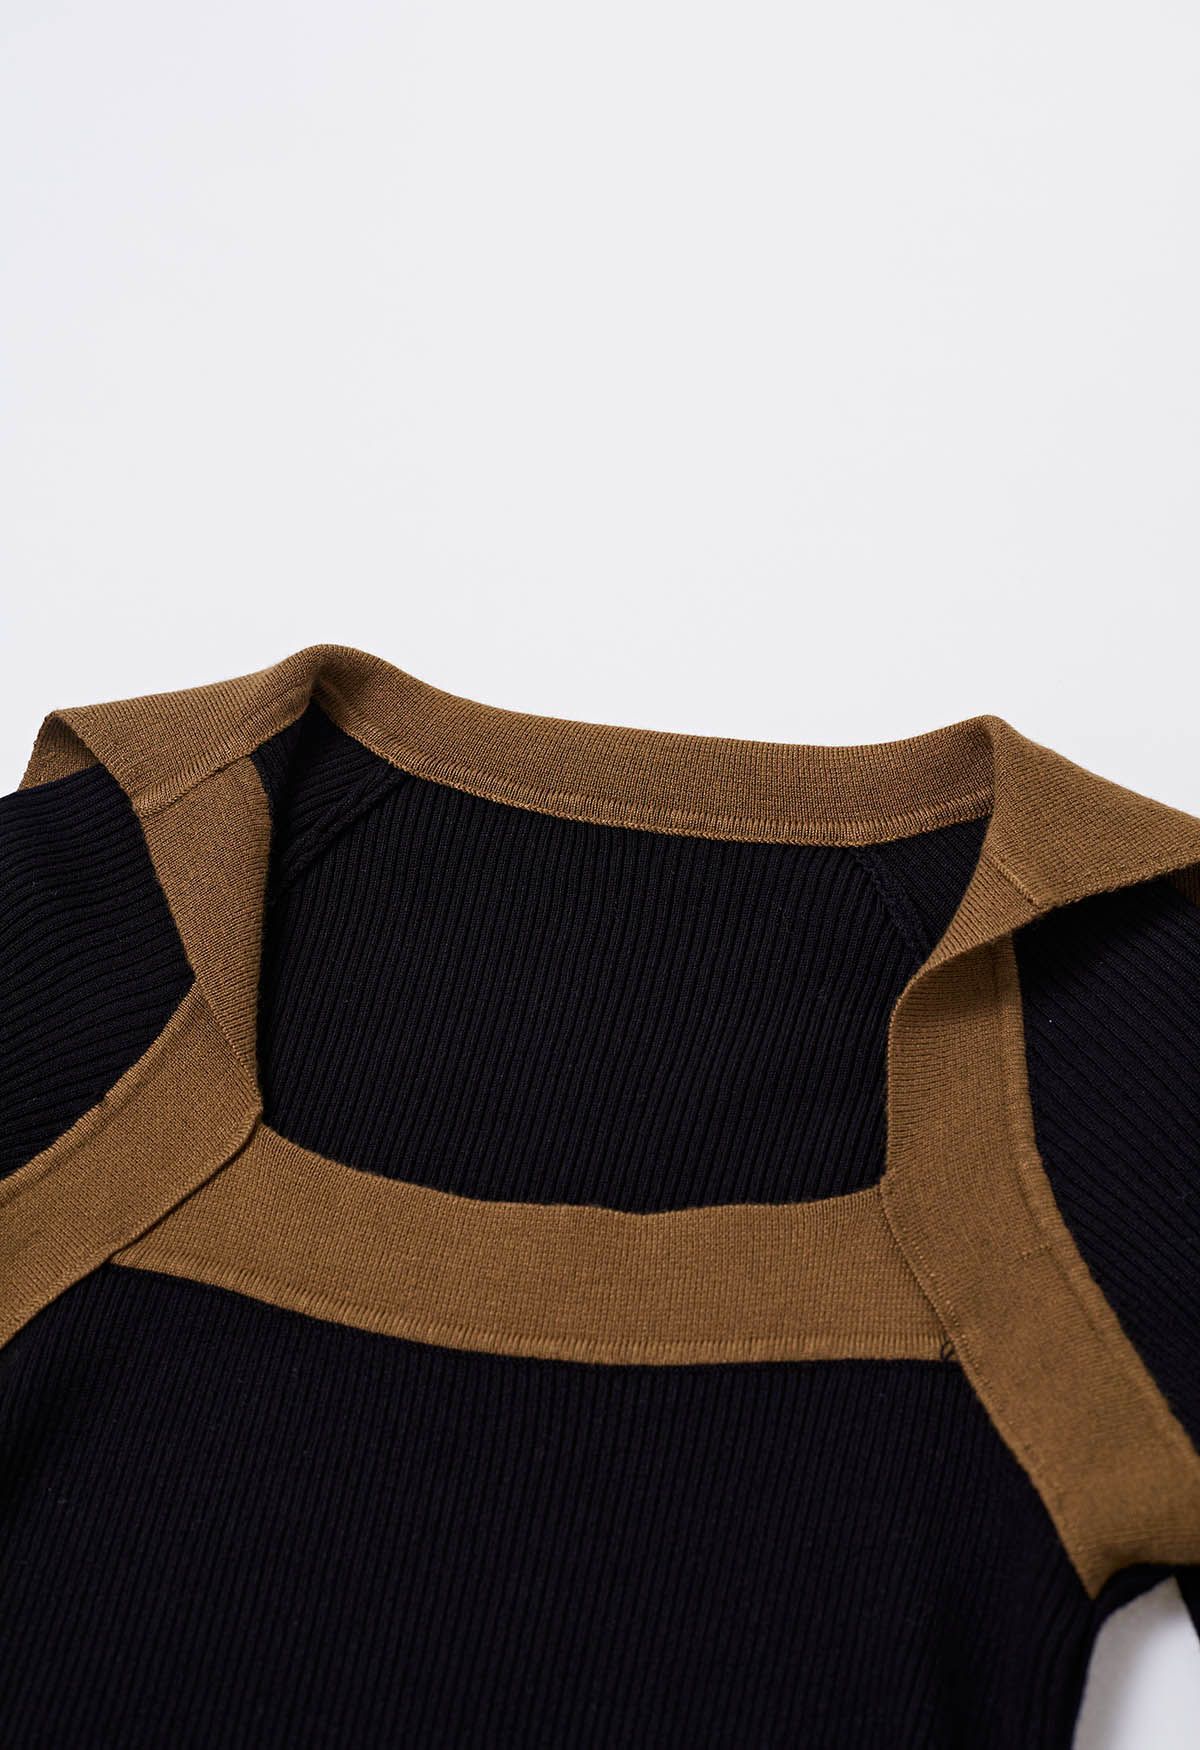 Square Neck Collared Color Block Knit Top in Black